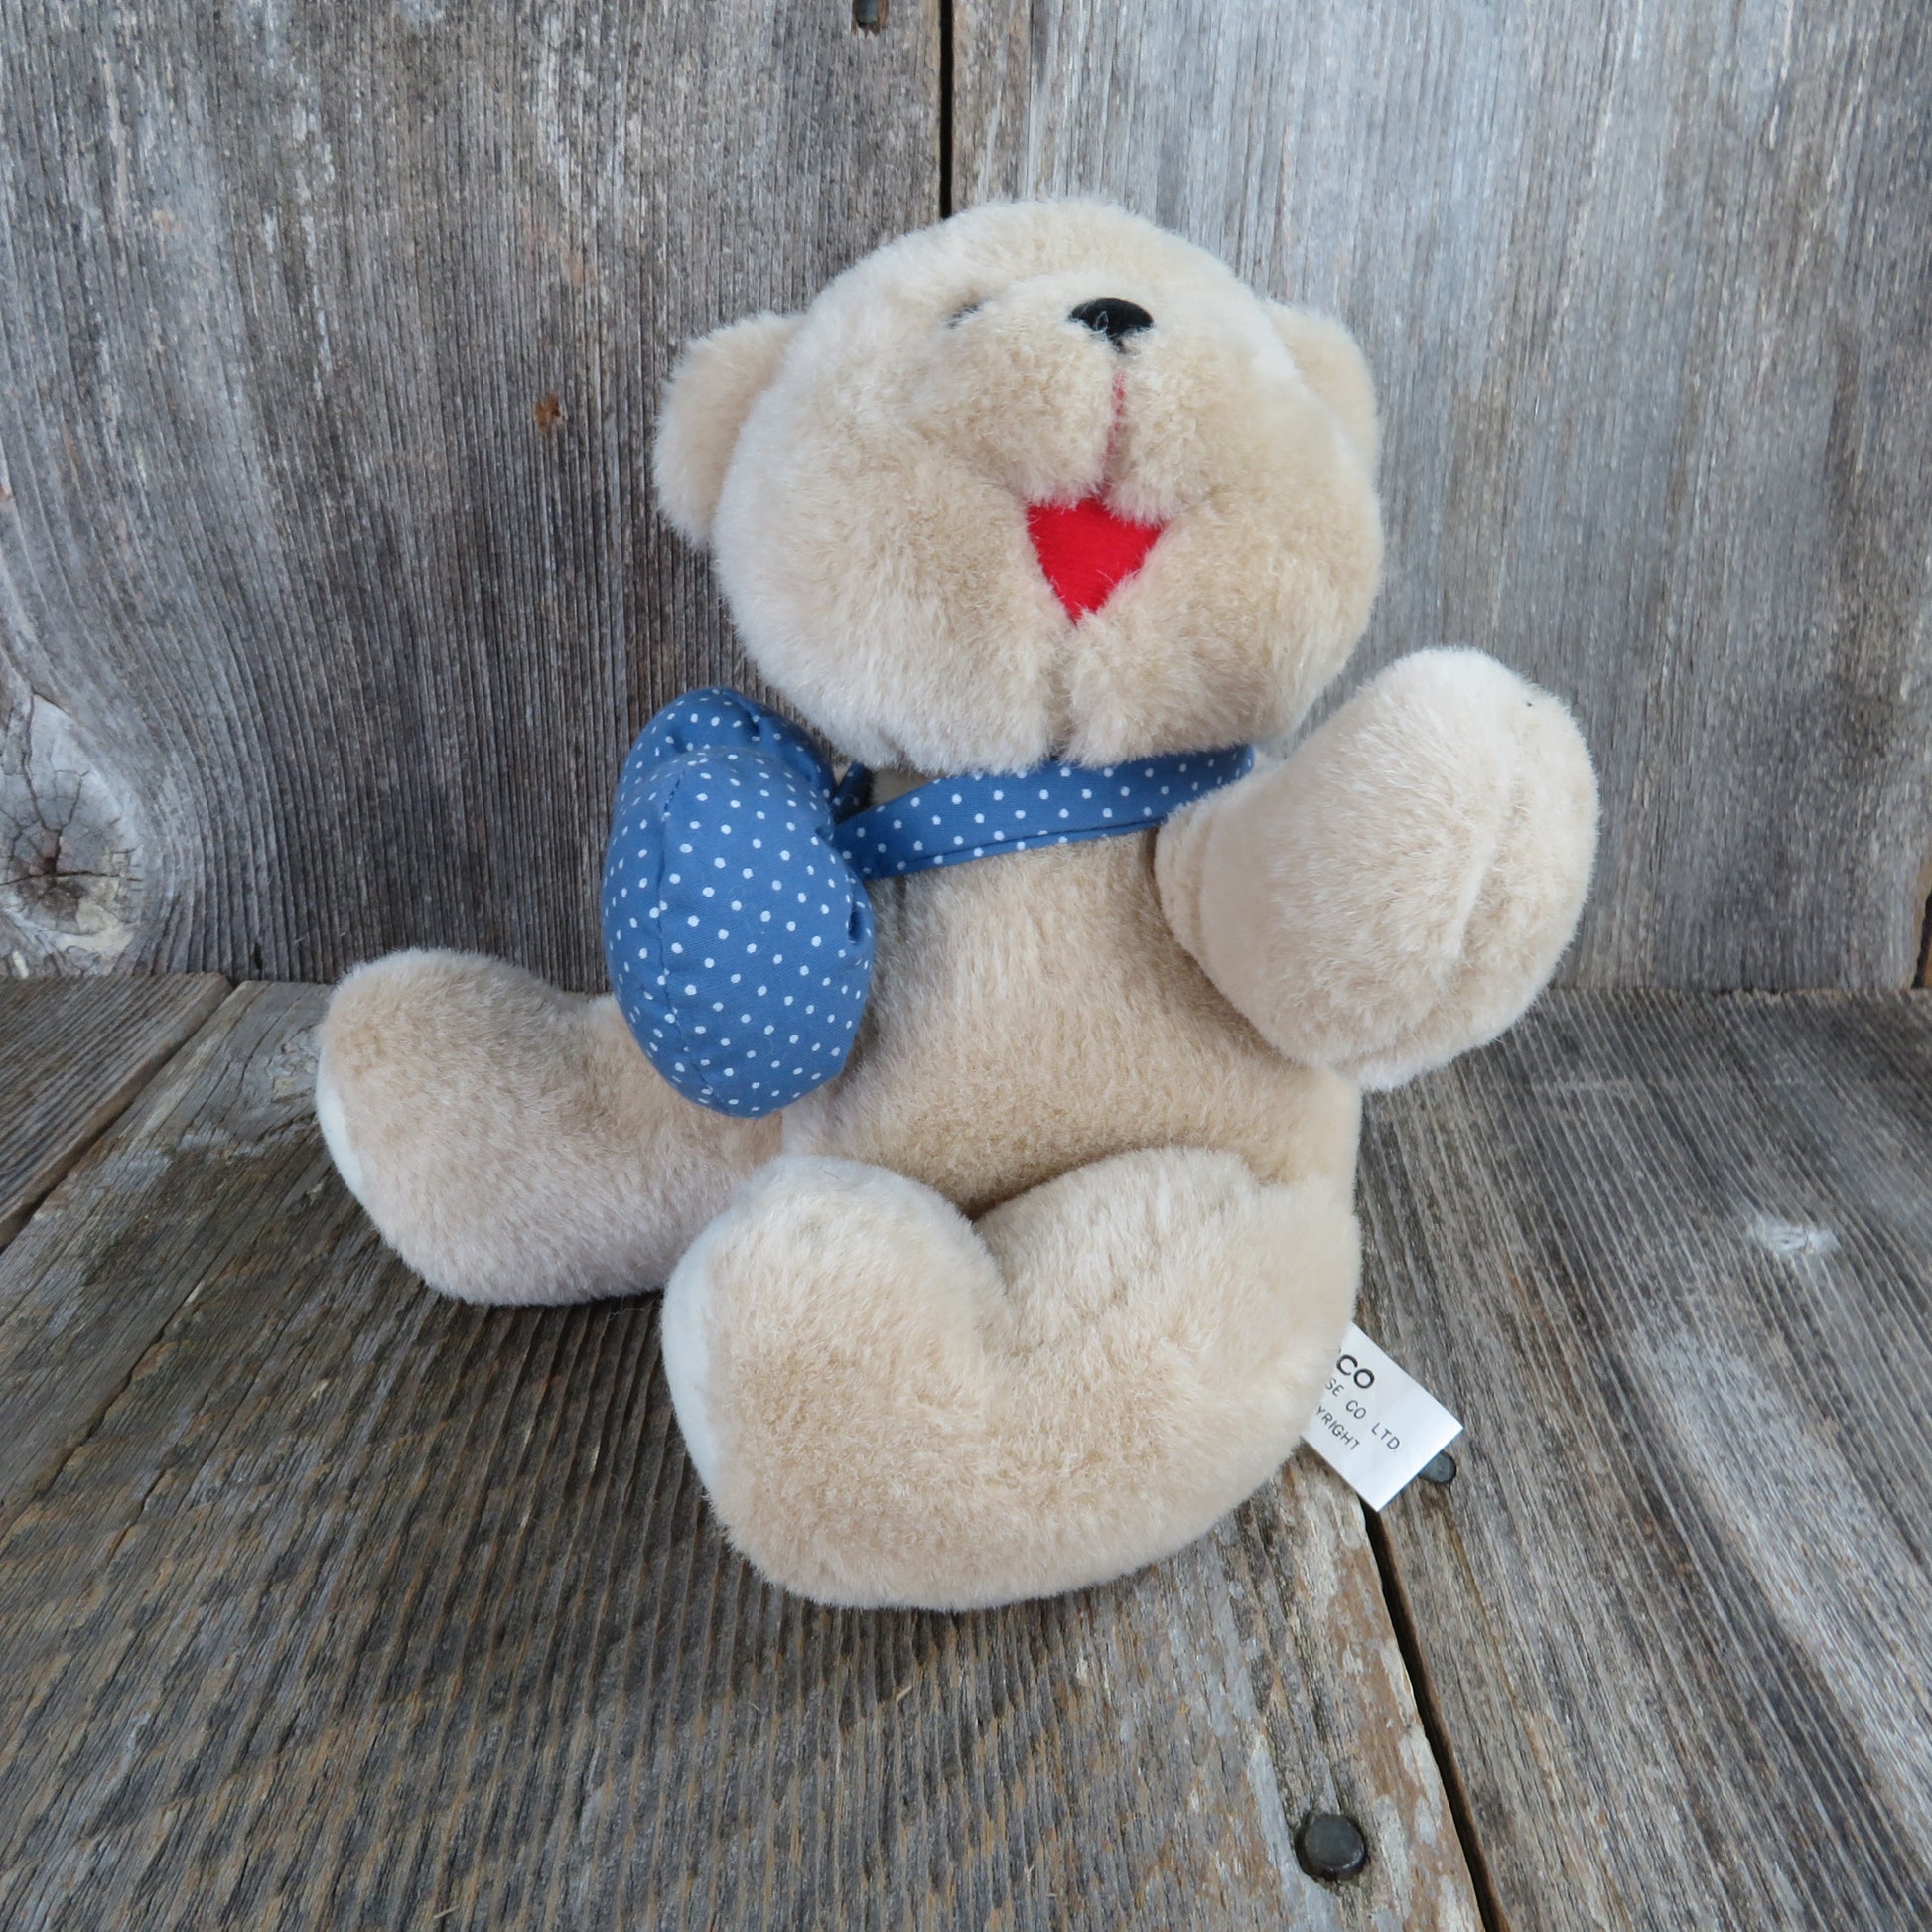 Vintage Teddy Bear Plush Loving Touch Boy Puffy Bow Anco 1994 Blue Polka Dot Smile - At Grandma's Table